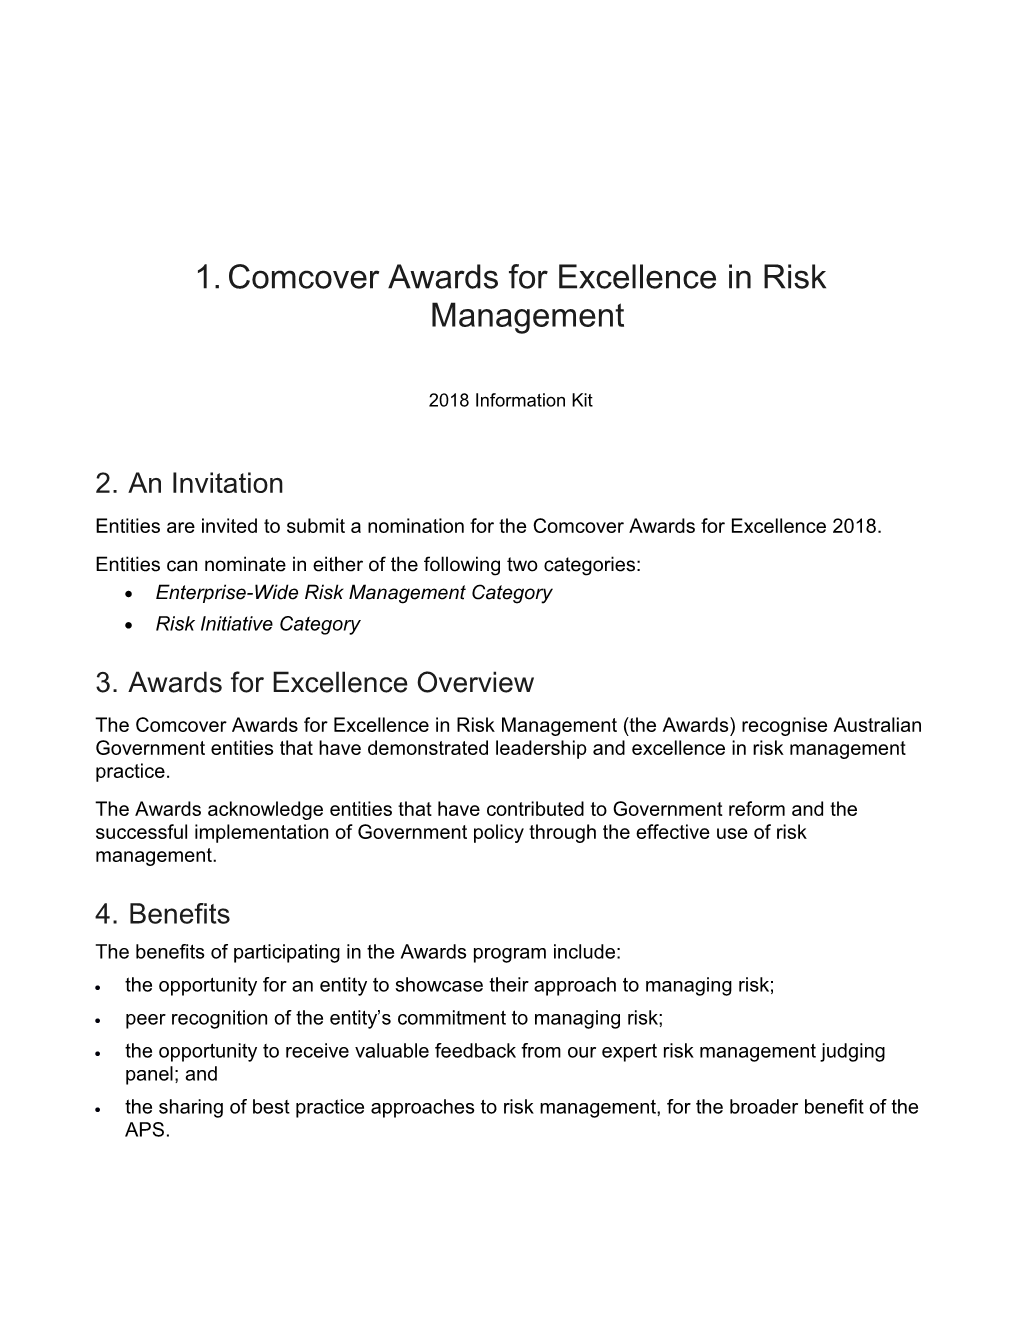 Comcover Awards for Excellence in Risk Management